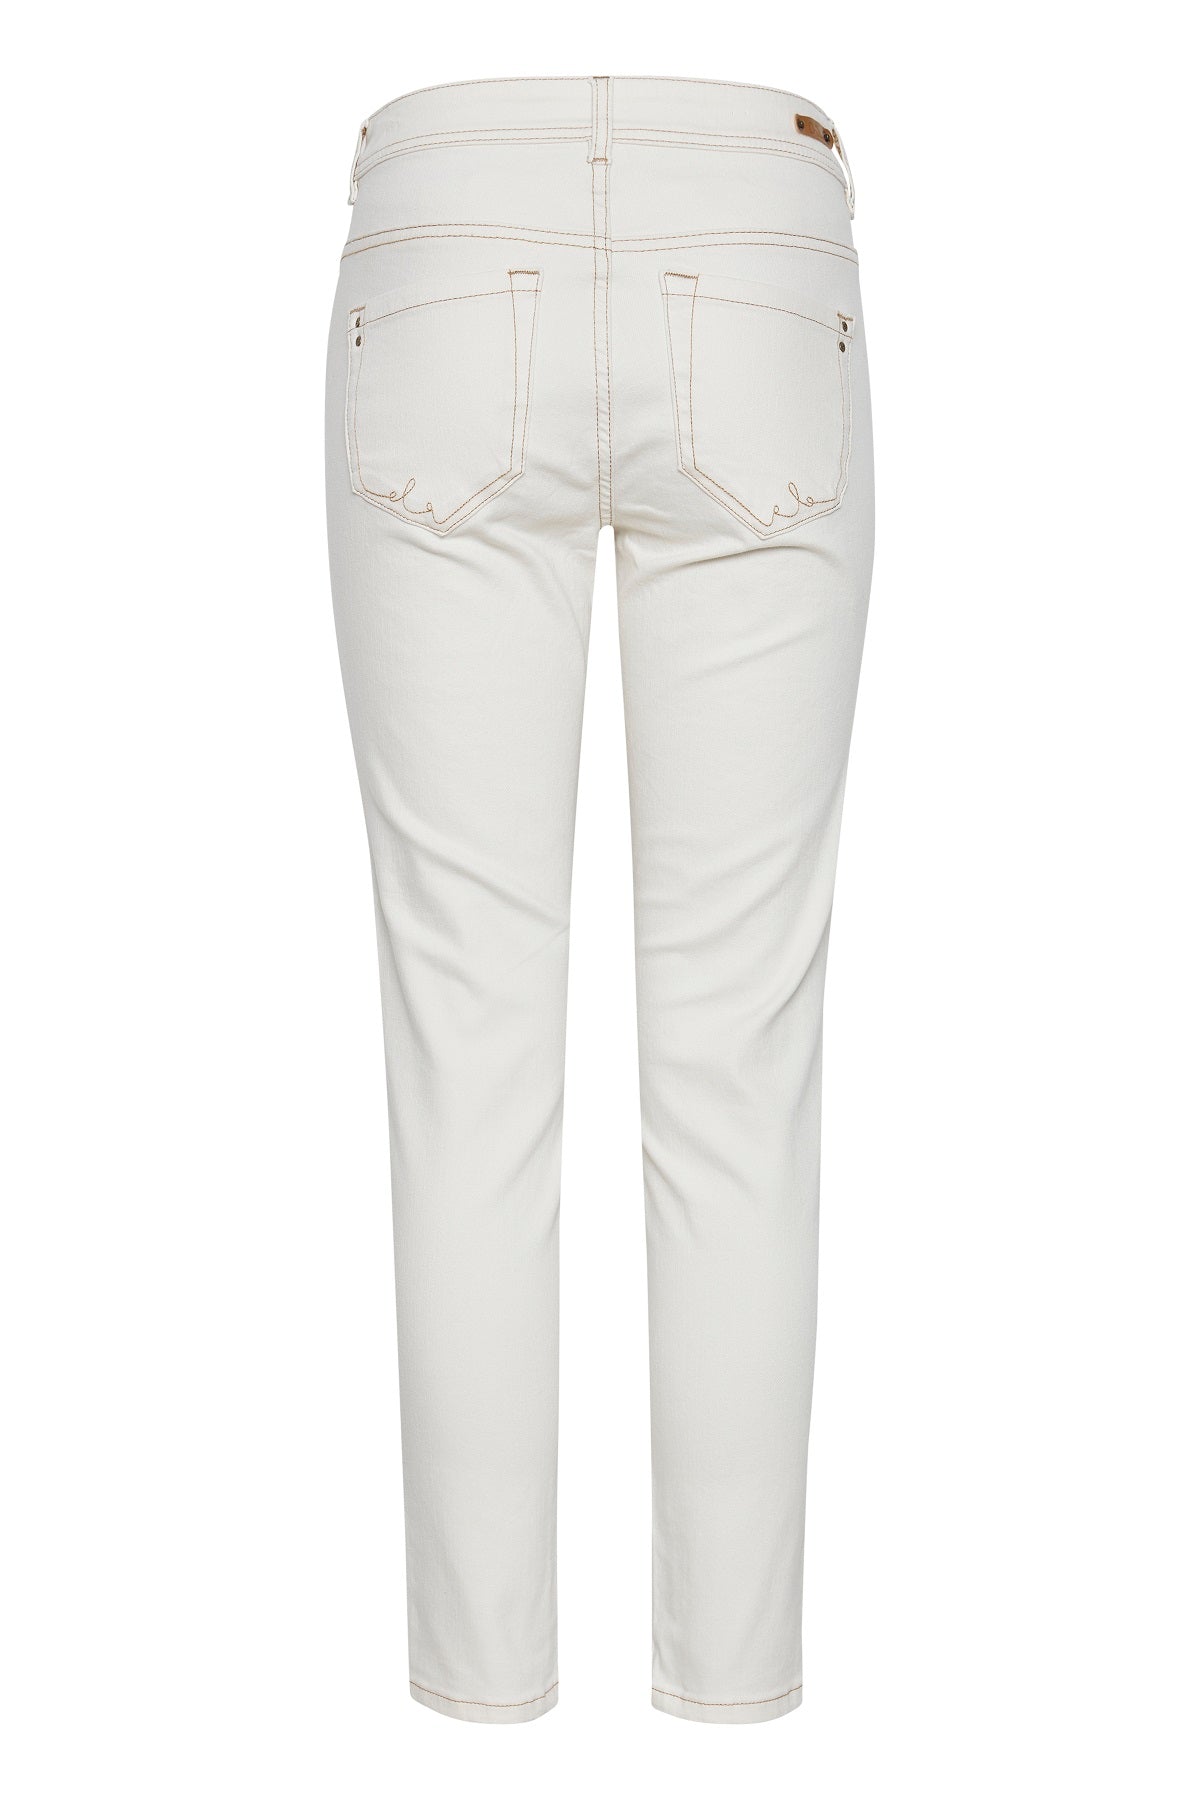 Fransa FRLISA TESSA JE 3 jeans, Special White Denim